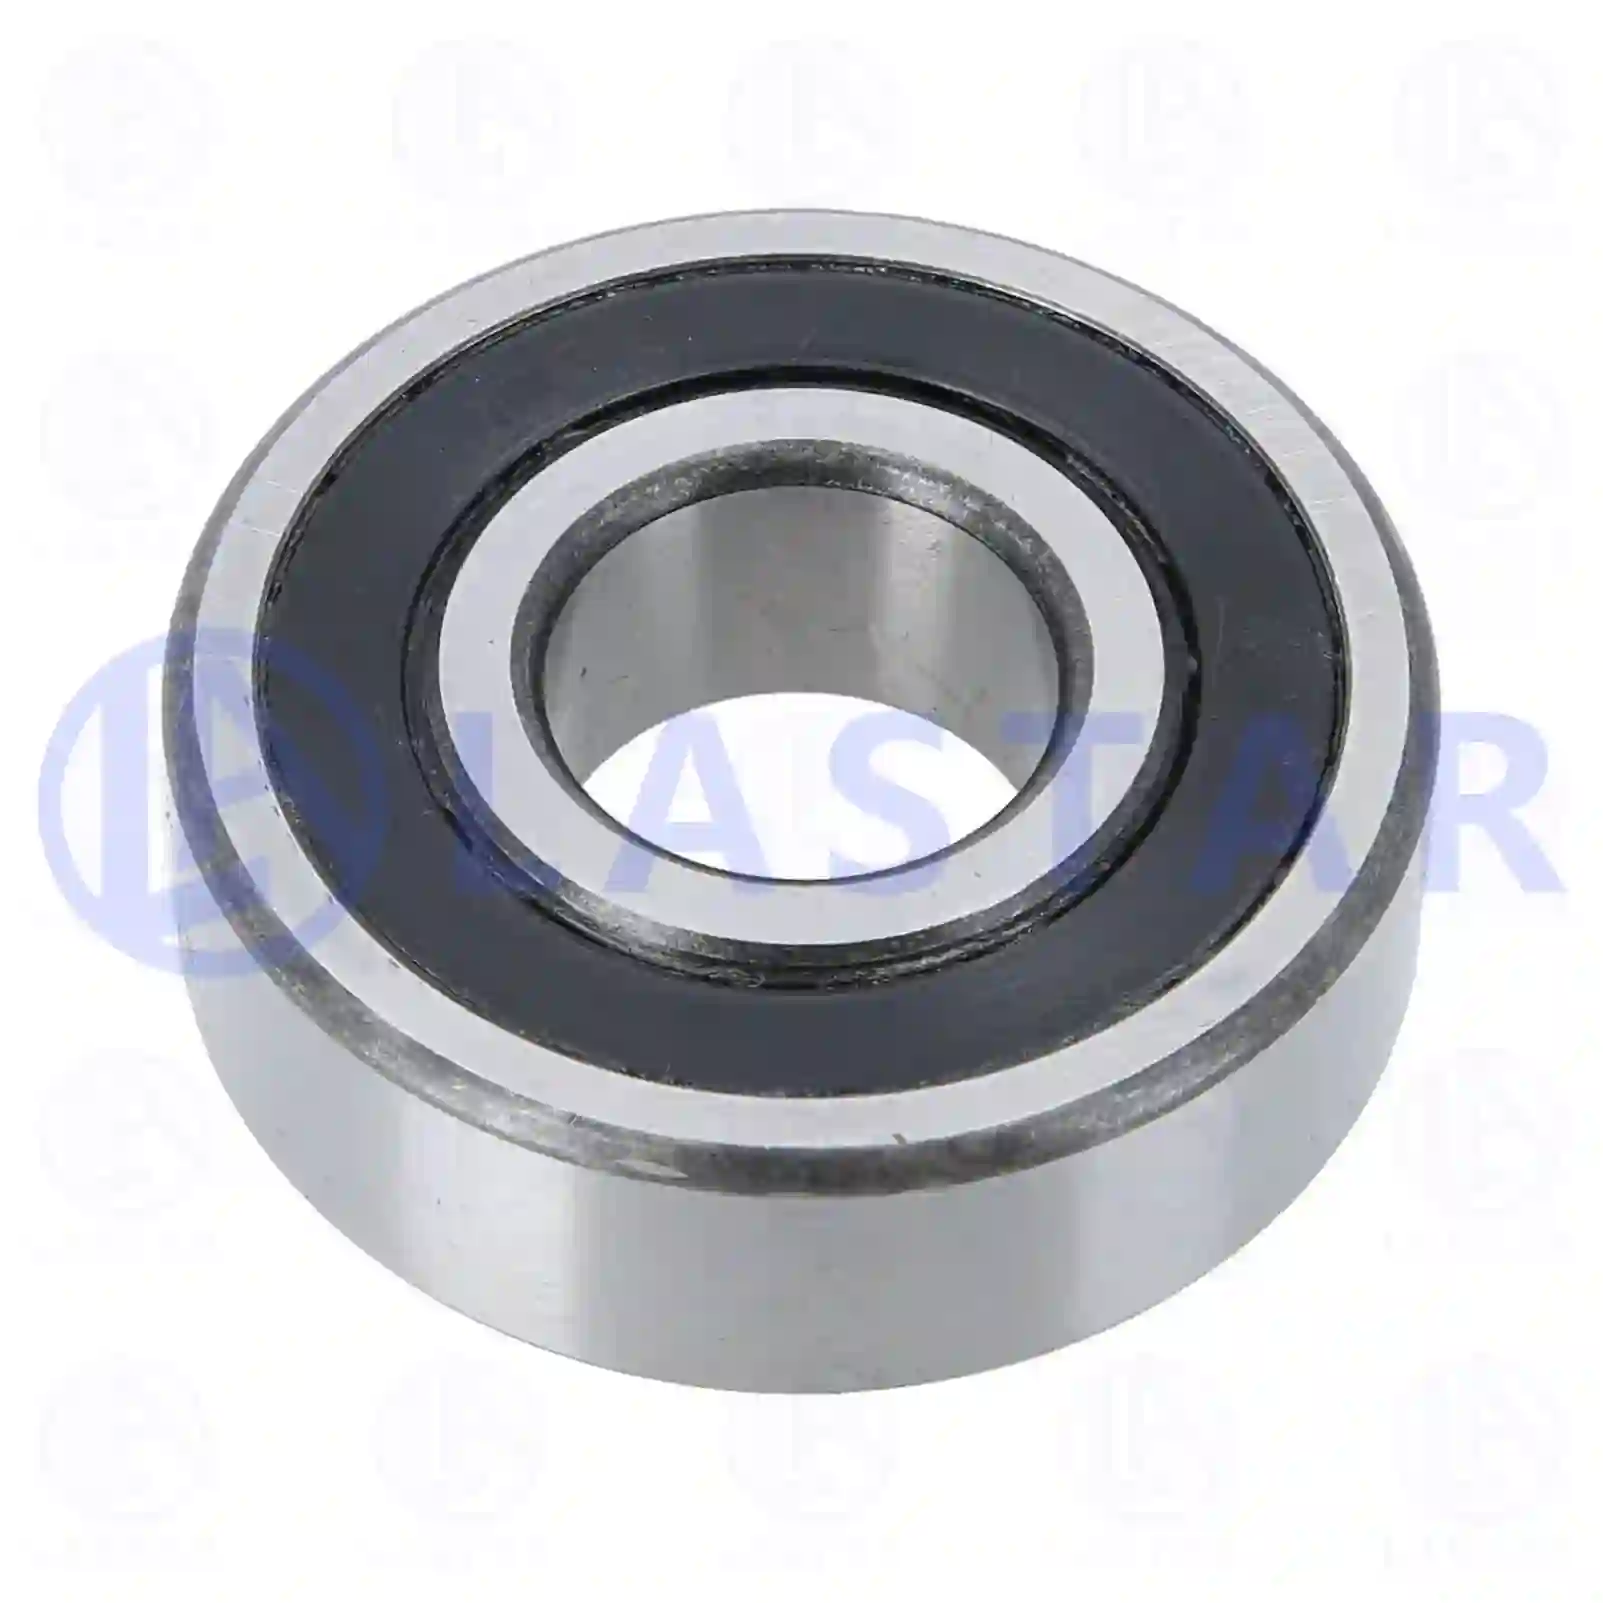 Release Lever Ball bearing, la no: 77722687 ,  oem no:0661319, 661319, ZG40206-0008 Lastar Spare Part | Truck Spare Parts, Auotomotive Spare Parts